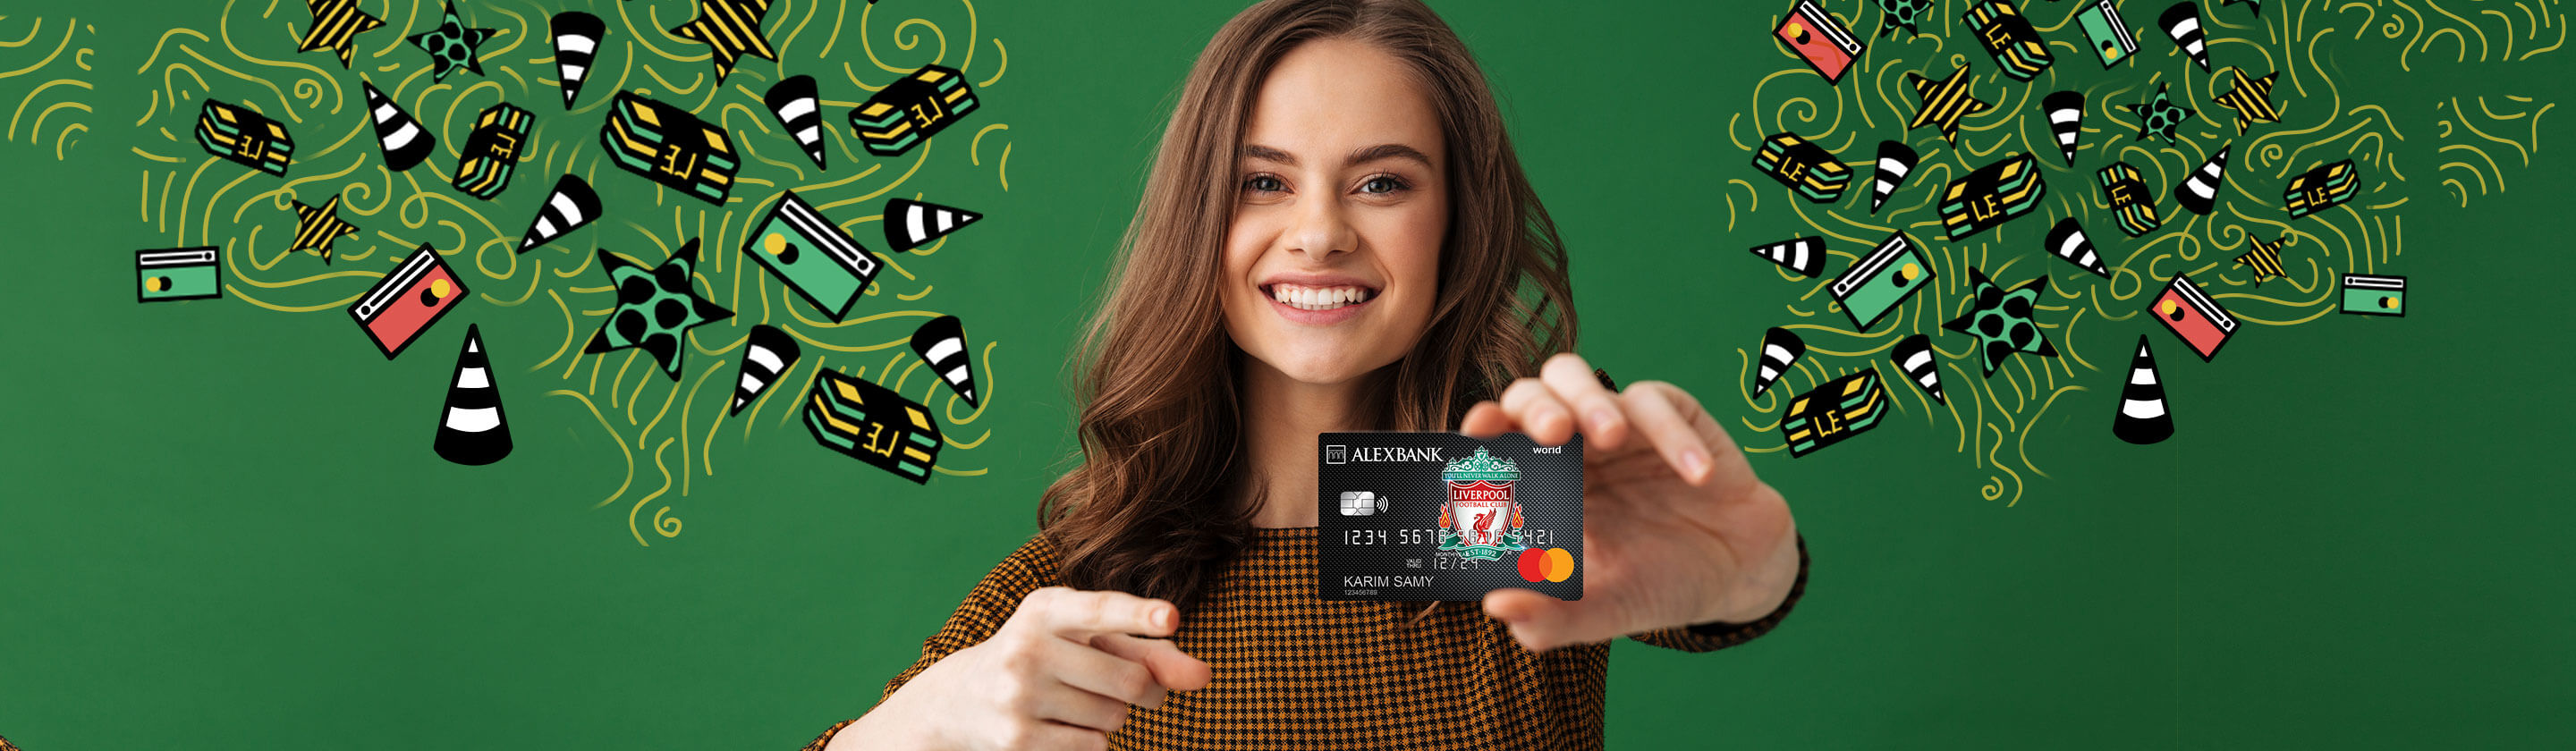 Liverpool World Credit Card